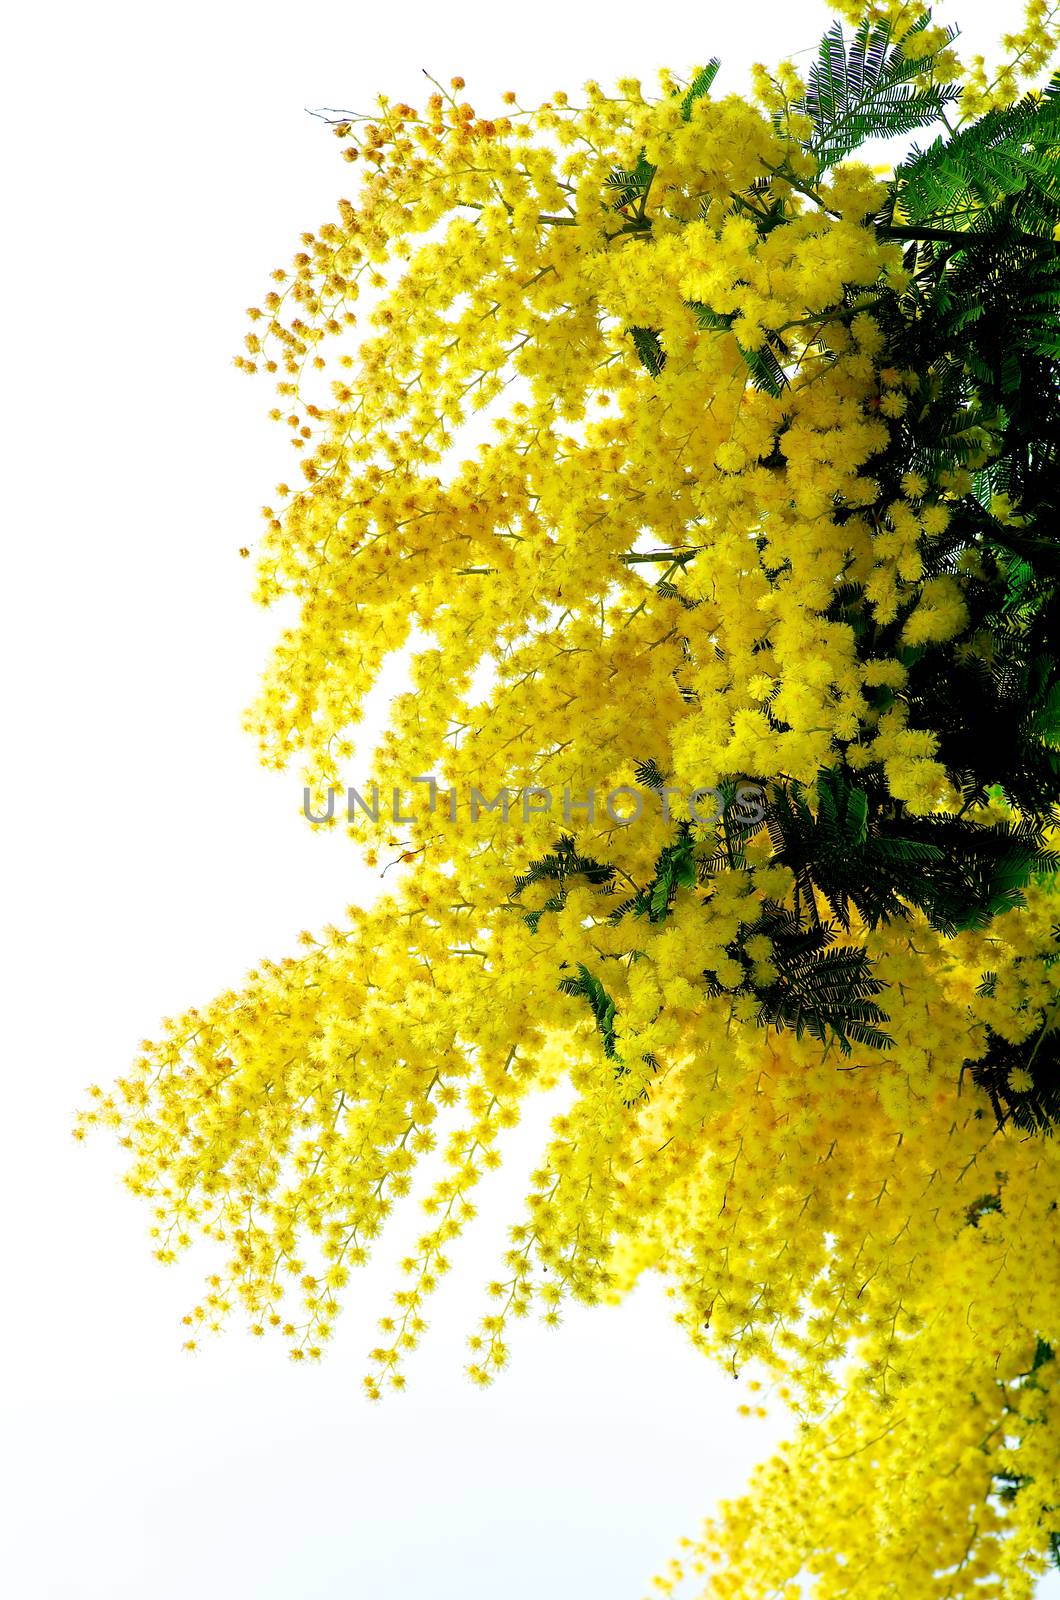 Flowering Yellow Mimosa by zhekos